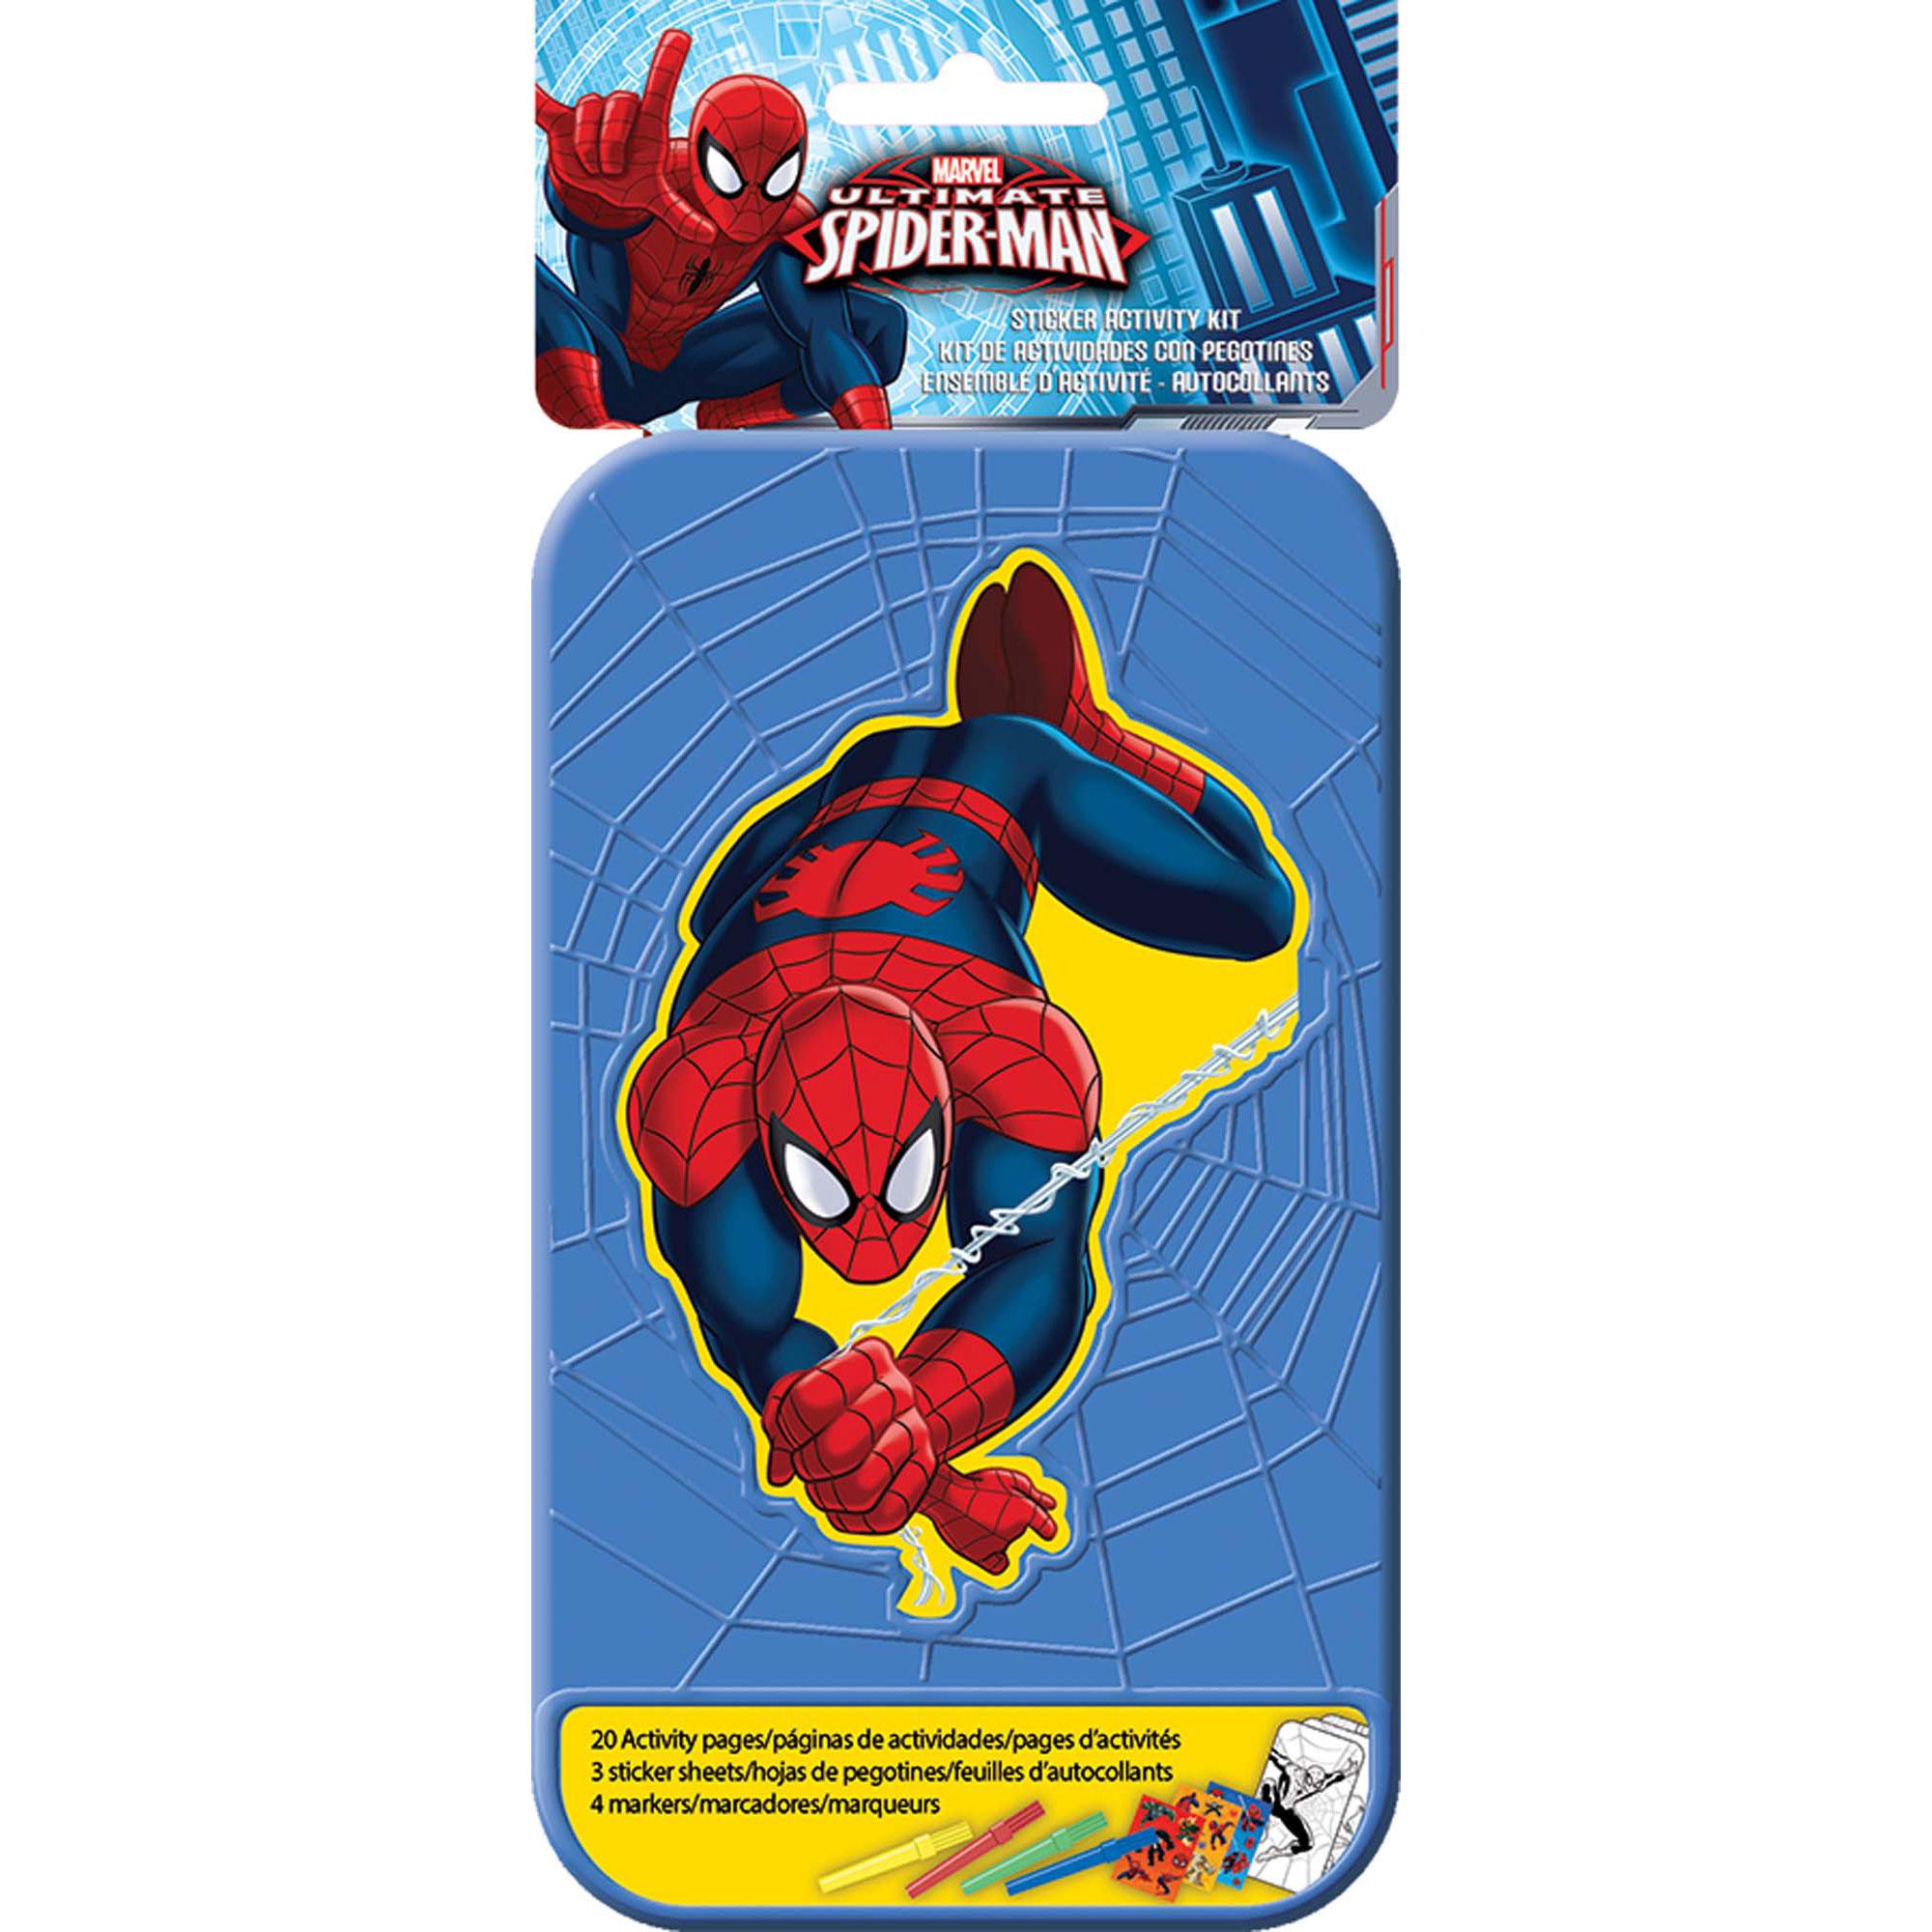 Spiderman Sticker Activity Kit Party Favors - Party Centre - Party Centre